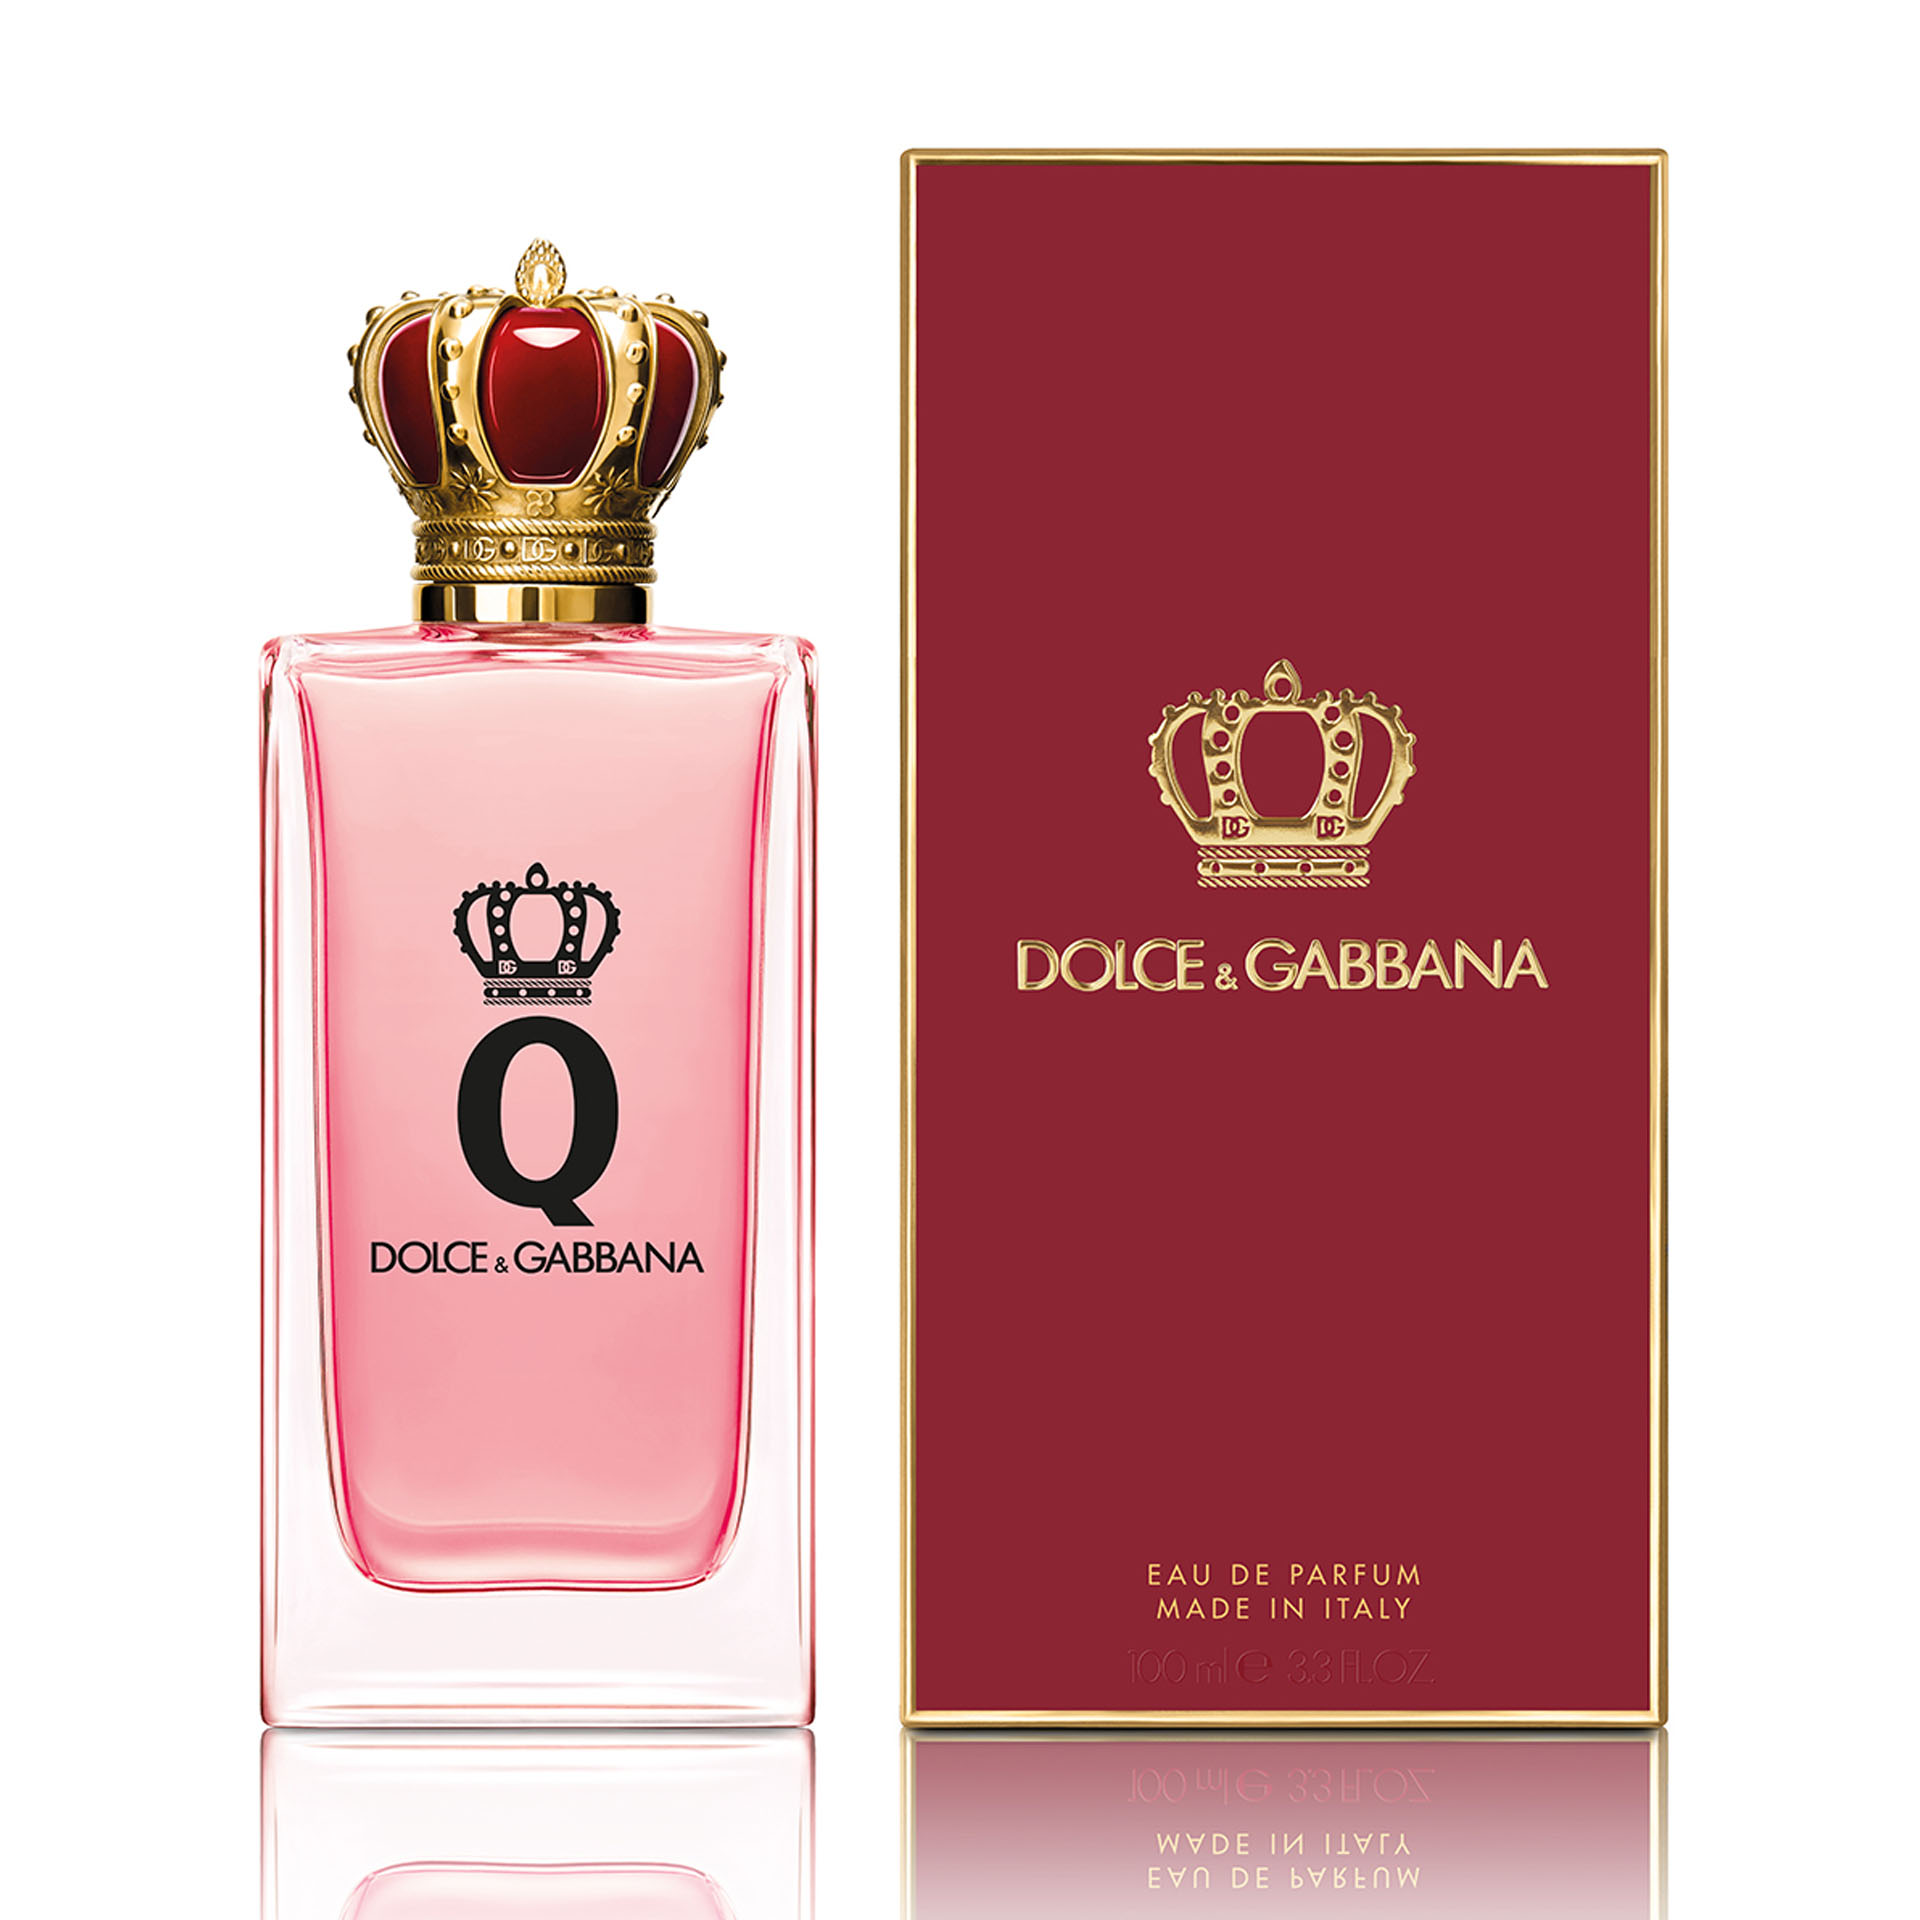 Дольче габбана кью отзывы. Dolce Gabbana q духи. Q by Dolce Gabbana. Dolce Gabbana q EDP. Дольче Габбана Queen духи.